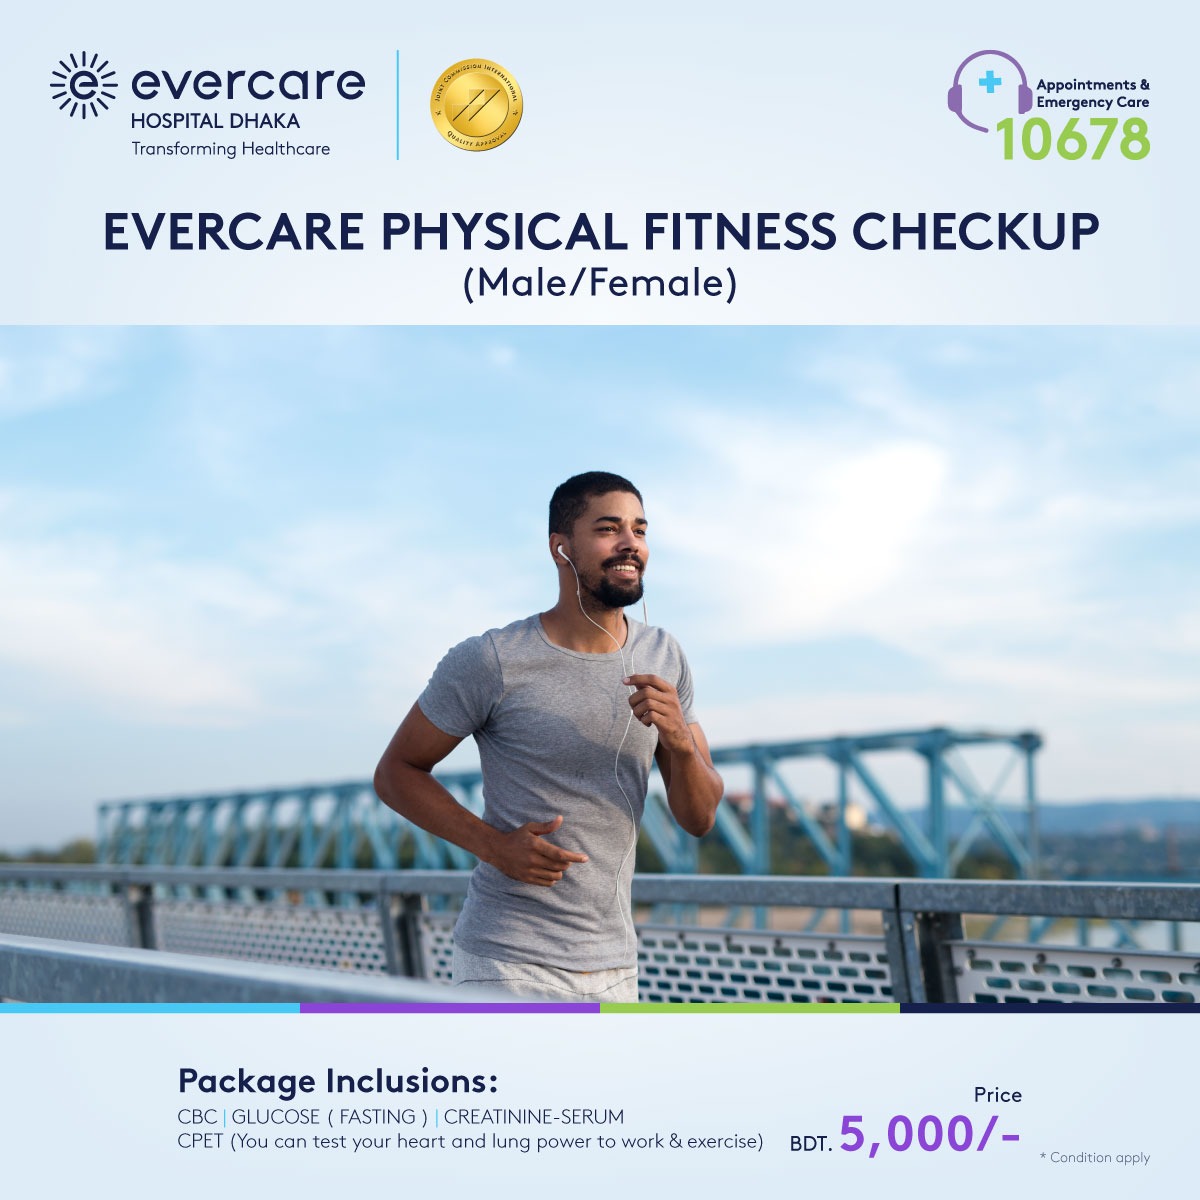 evercarehospitaldhaka on X: Physical Fitness/Wellbeing Checkup